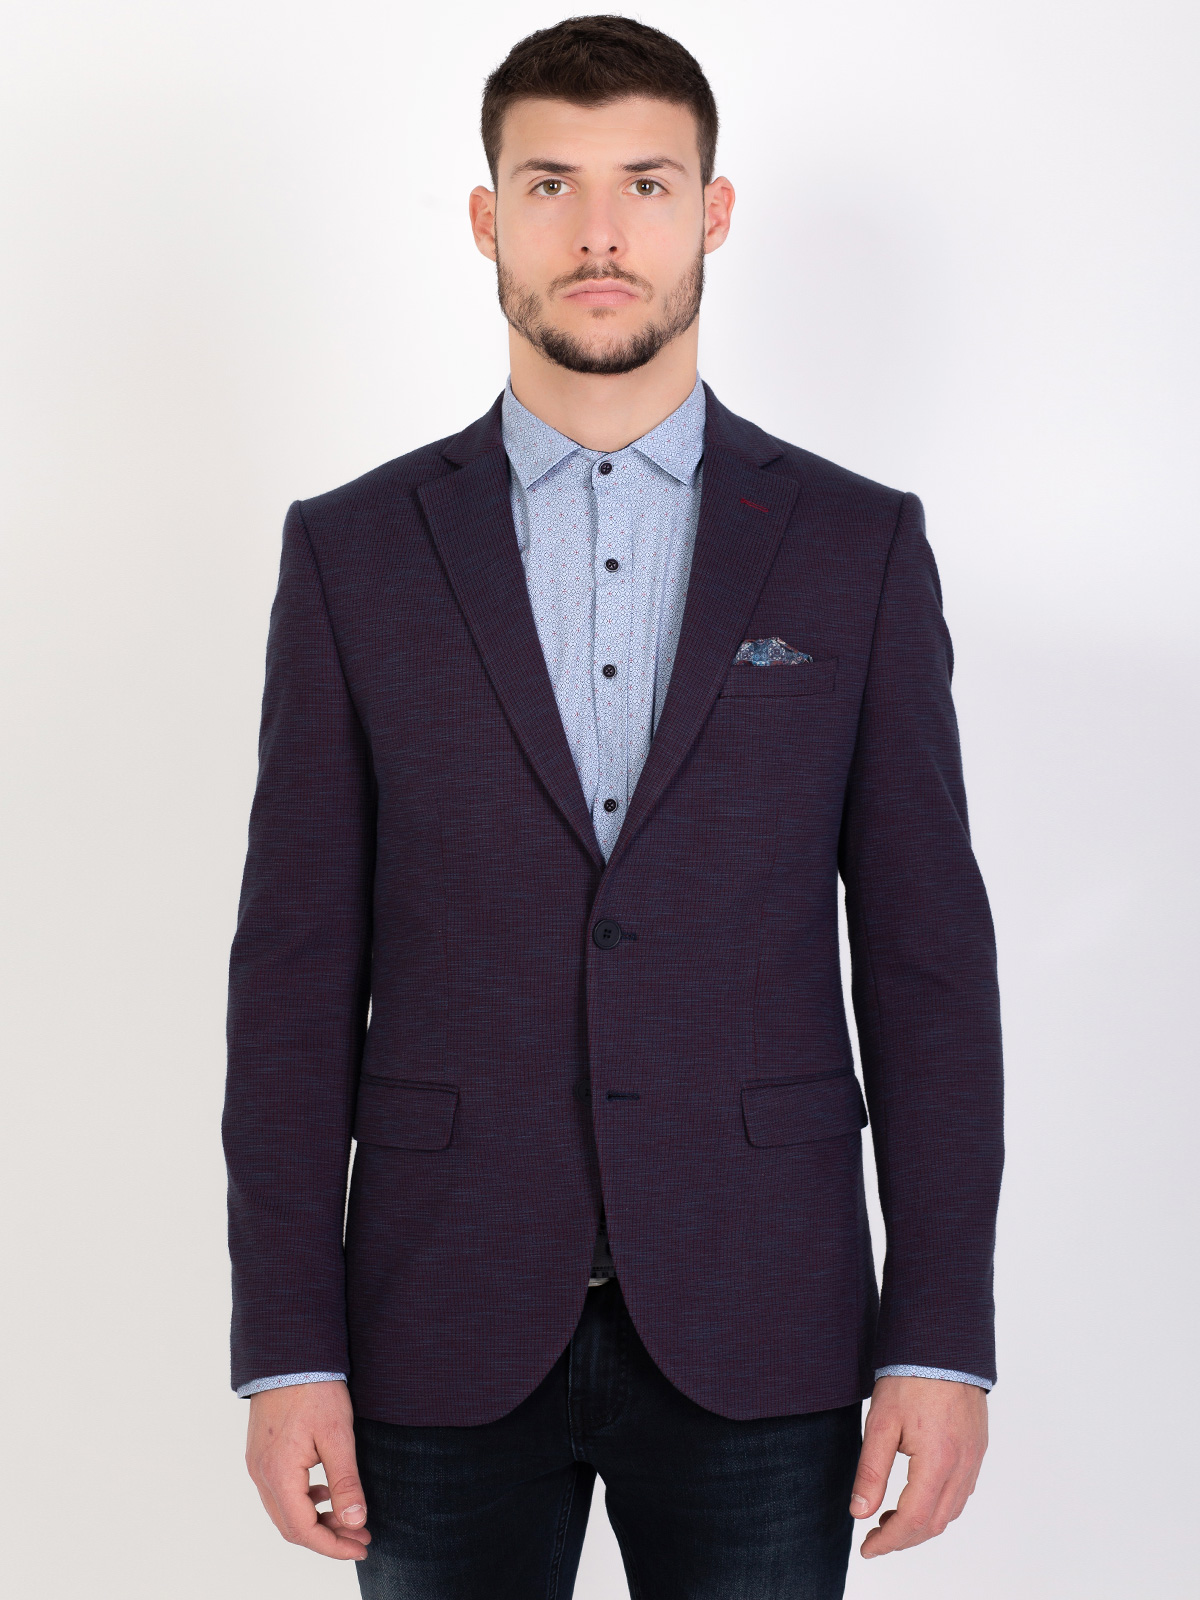 Jacheta albastru si violet - 64098 € 61.30 img2